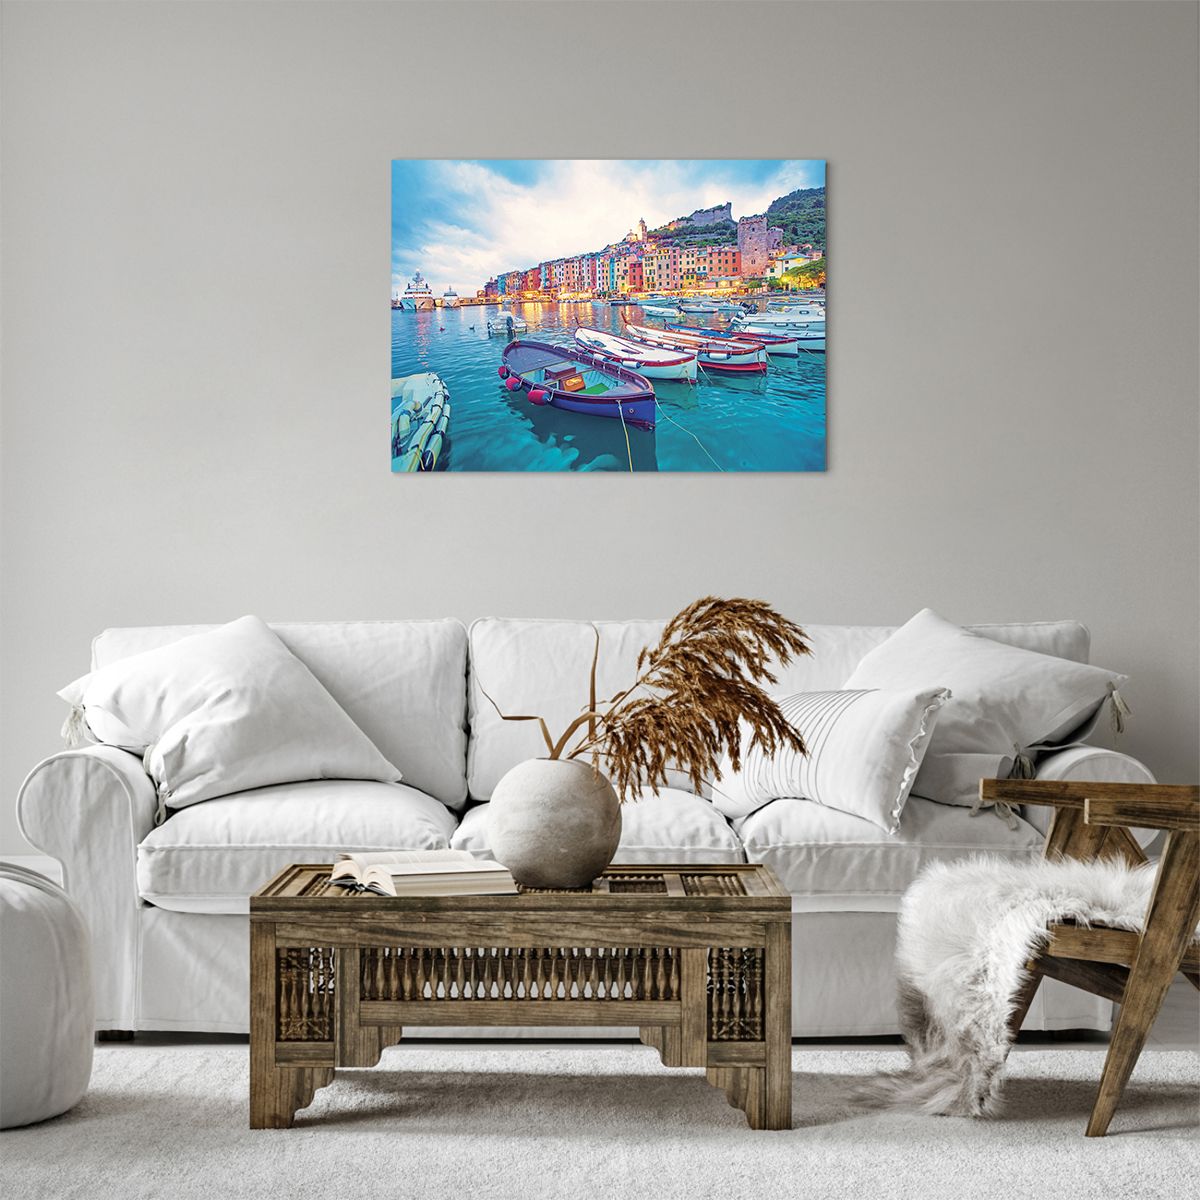 Quadro su tela Città Portuale, Quadro su tela Architettura, Quadro su tela Paesaggio, Quadro su tela Liguria, Quadro su tela Italia